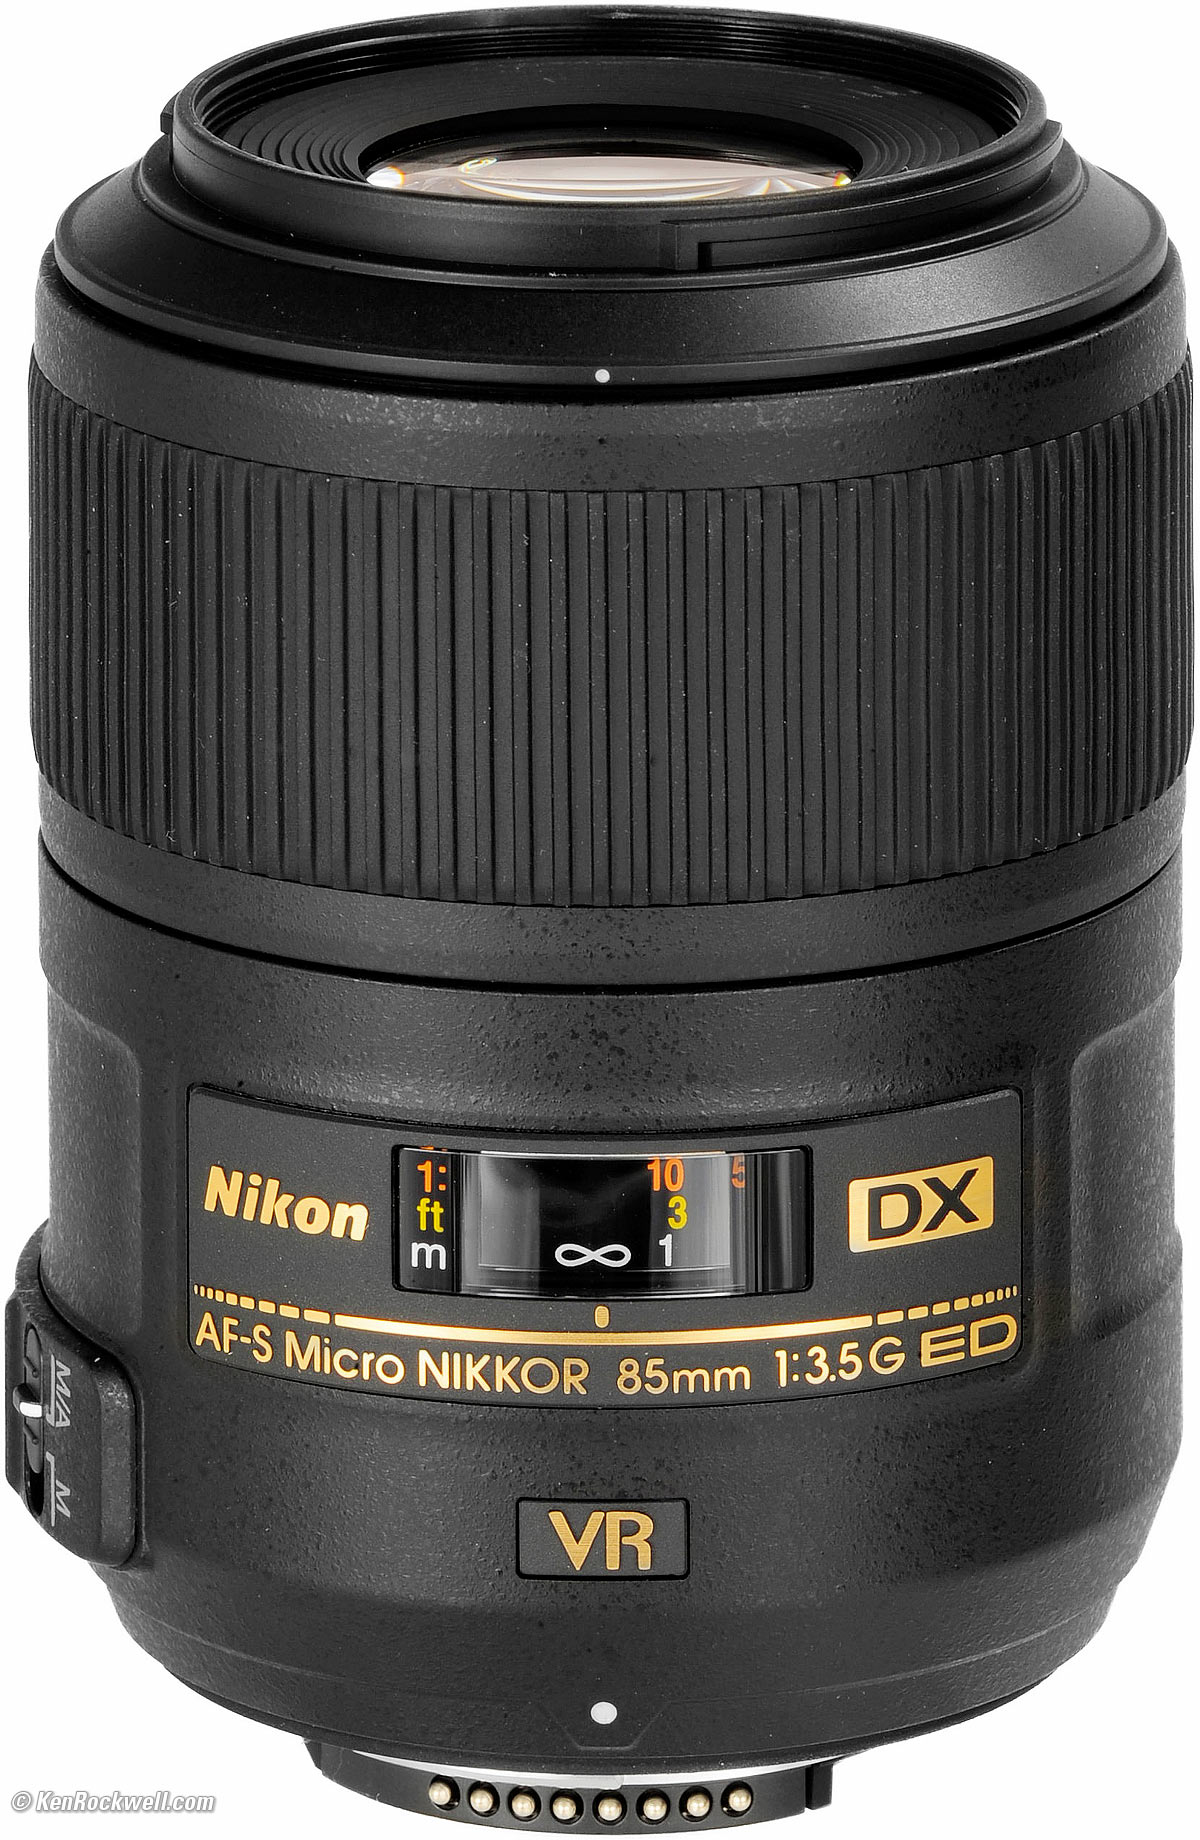 Nikon 85mm f/3.5 DX VR Macro